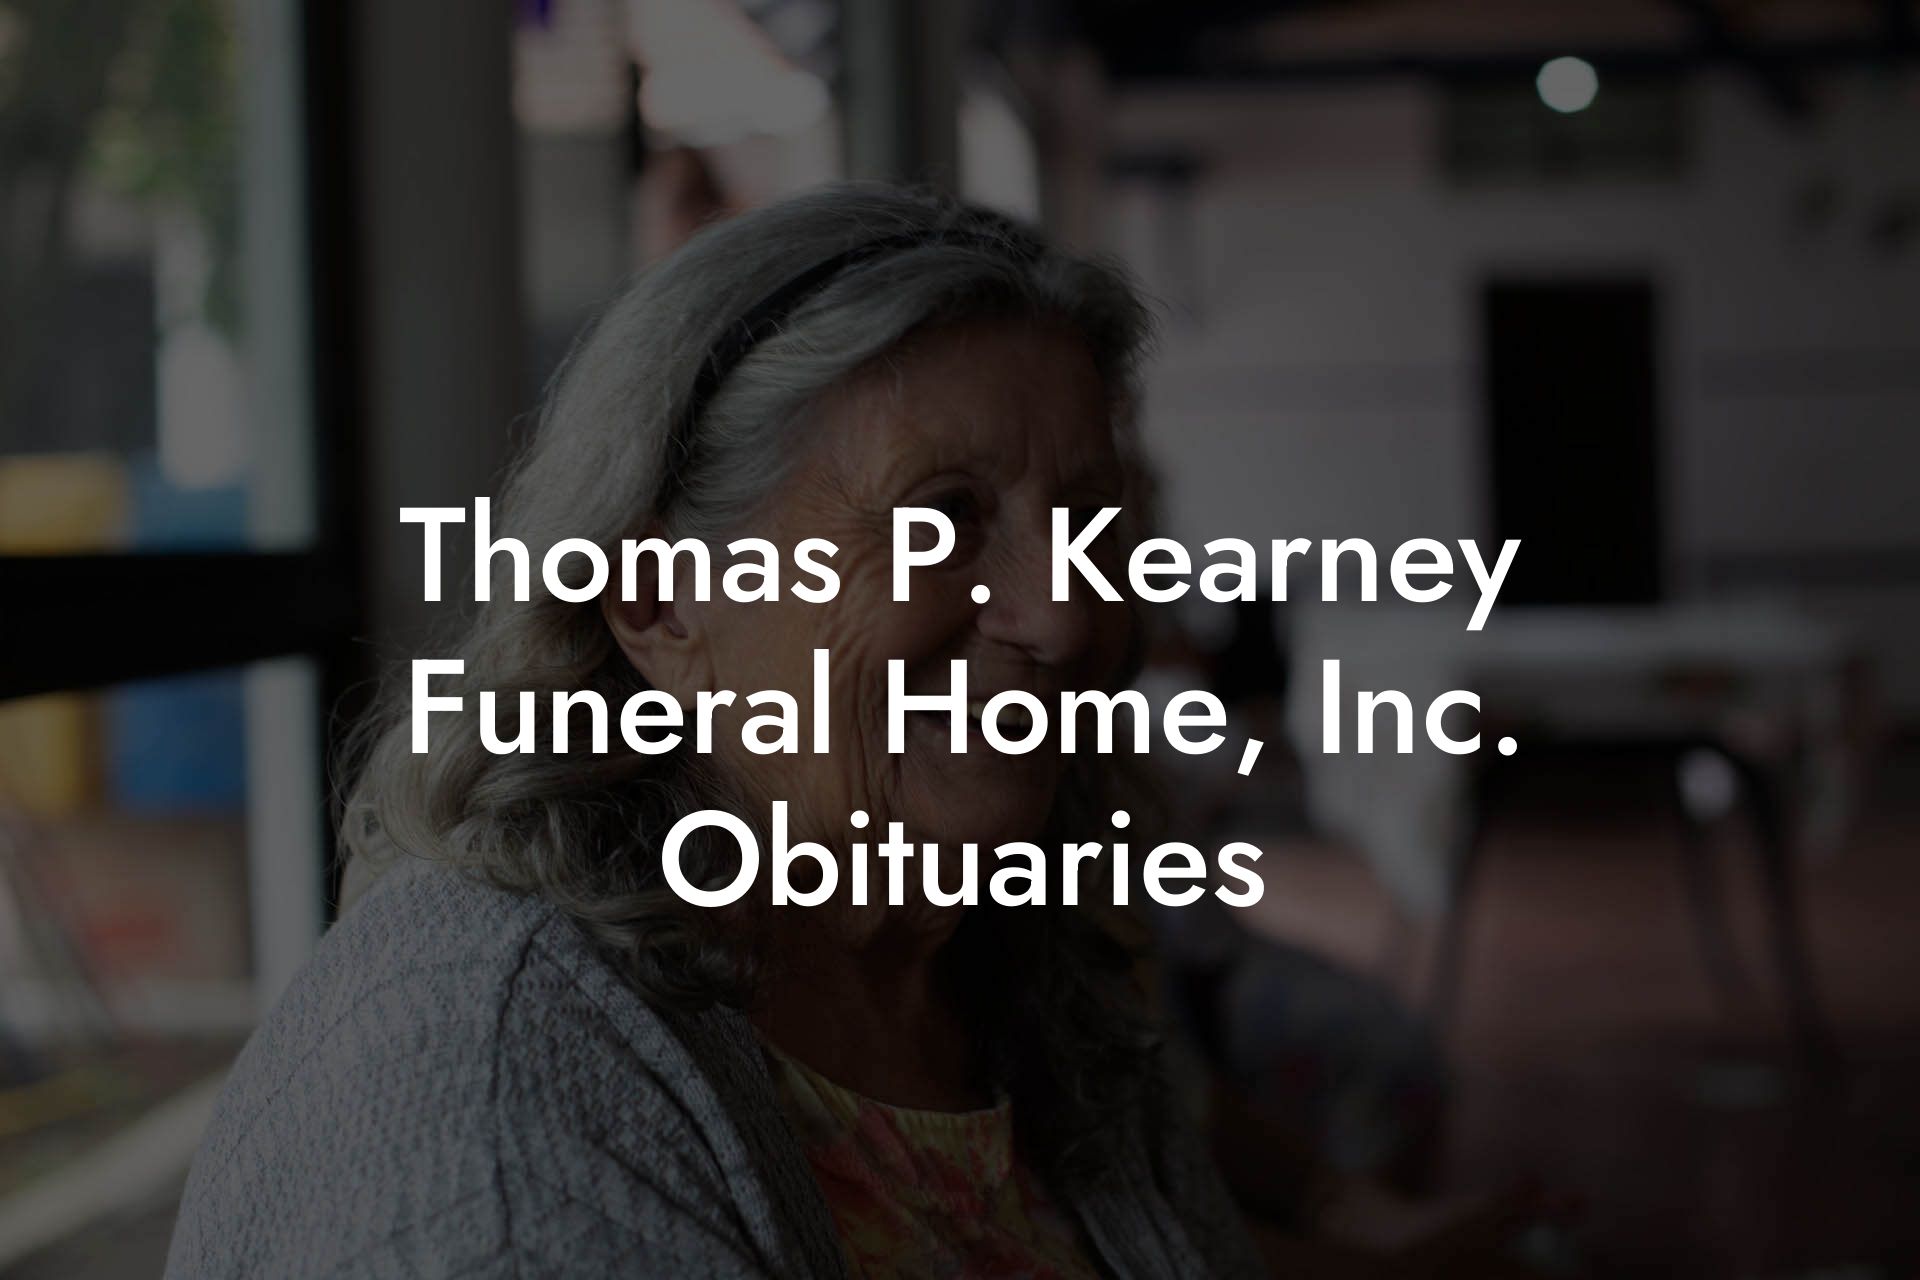 Thomas P. Kearney Funeral Home, Inc. Obituaries